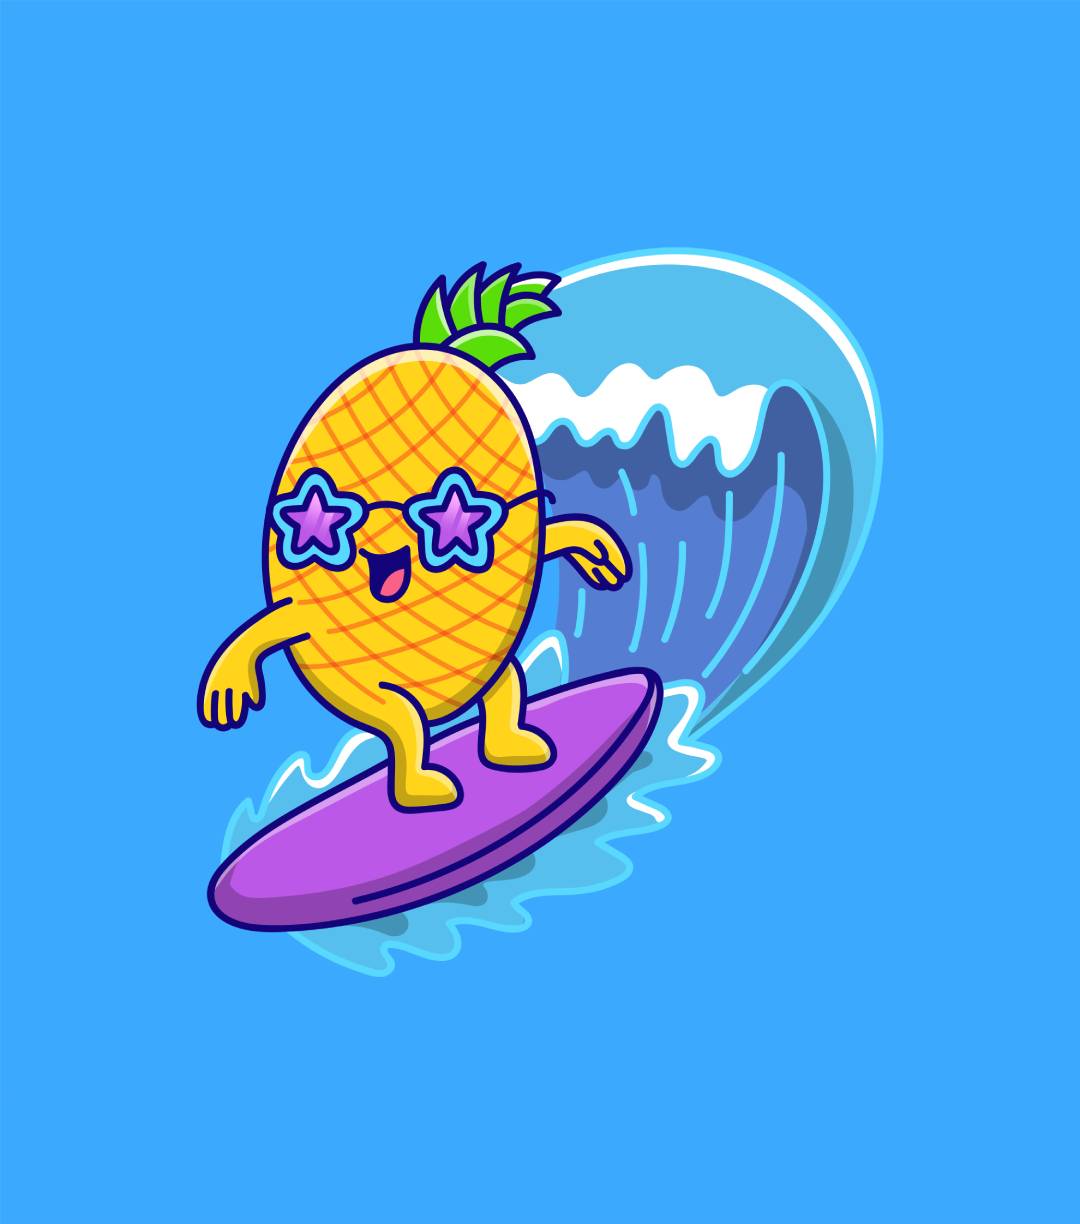 Pineapple Surfing Kid T-Shirt